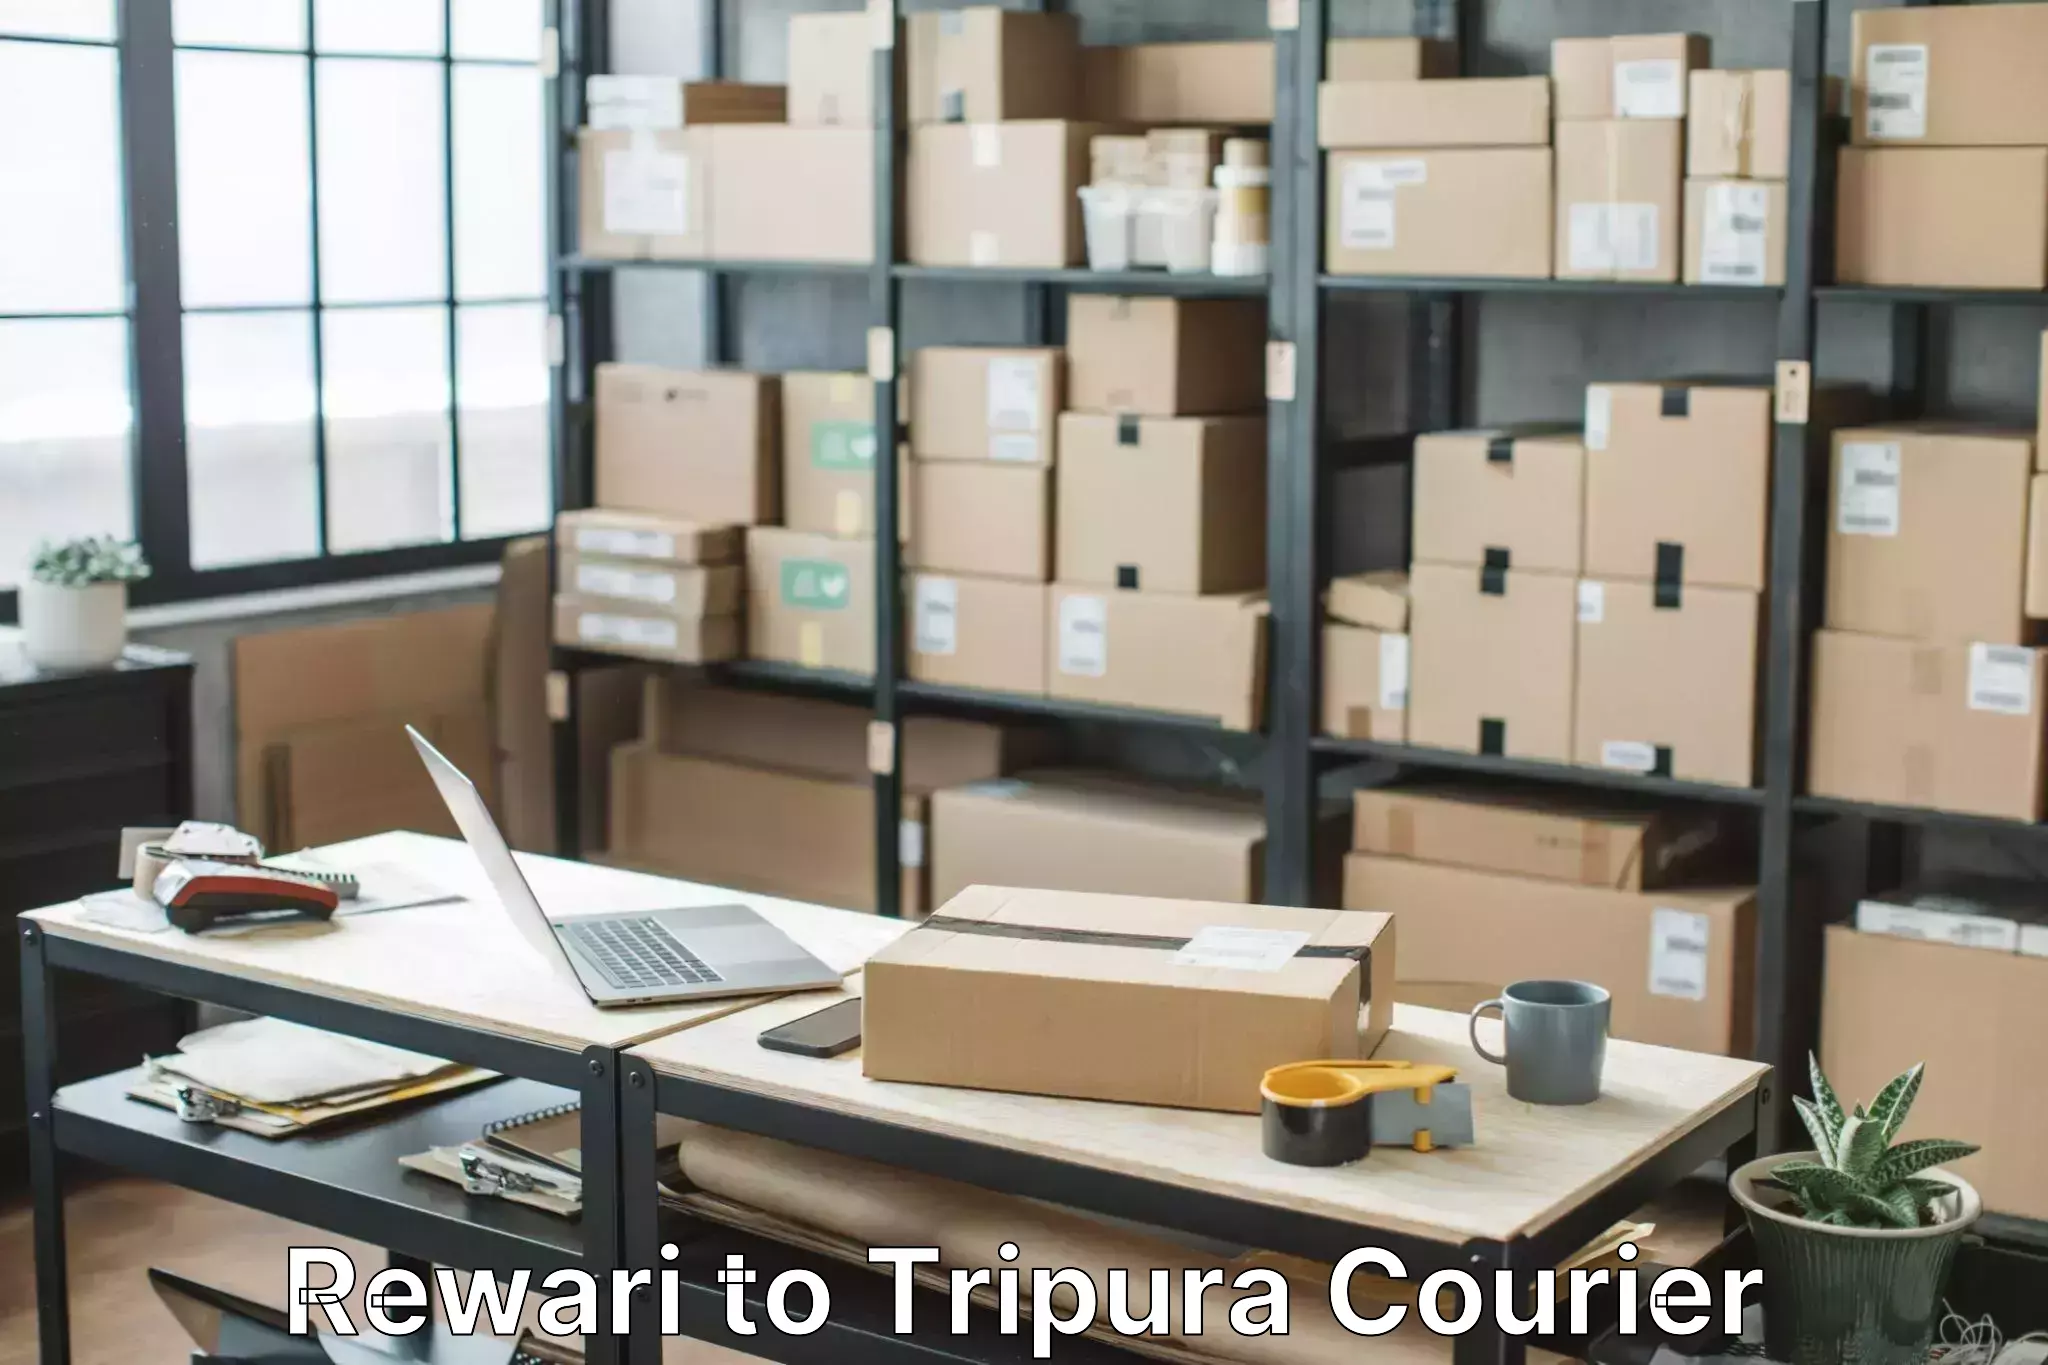 Trusted moving company Rewari to Udaipur Tripura